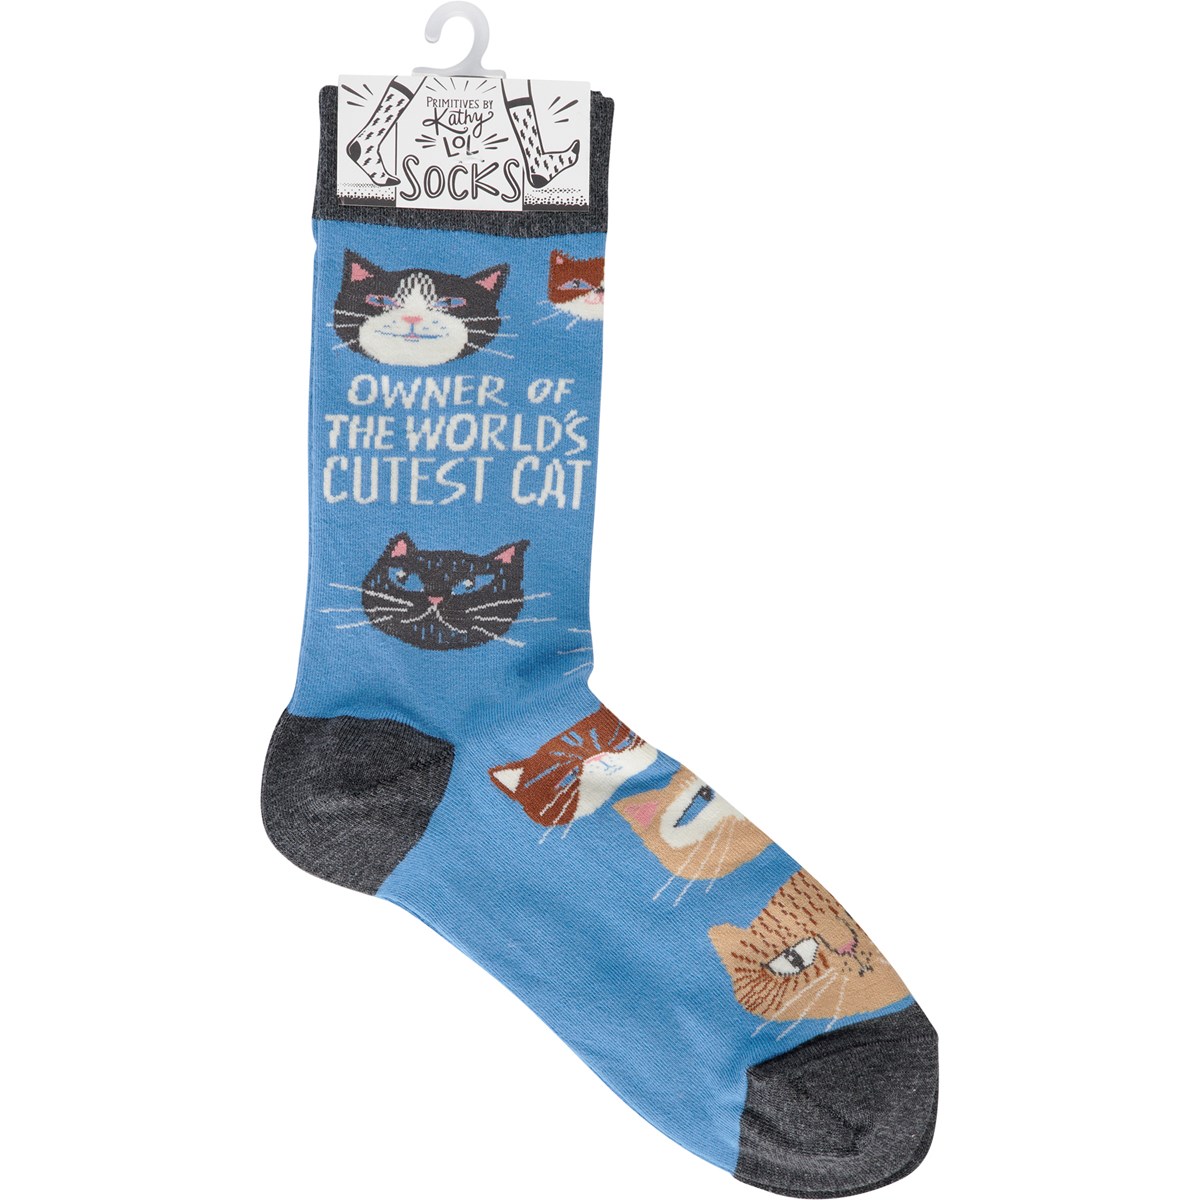 Owner Of World's Cutest Cat Socks - Cotton, Nylon, Spandex